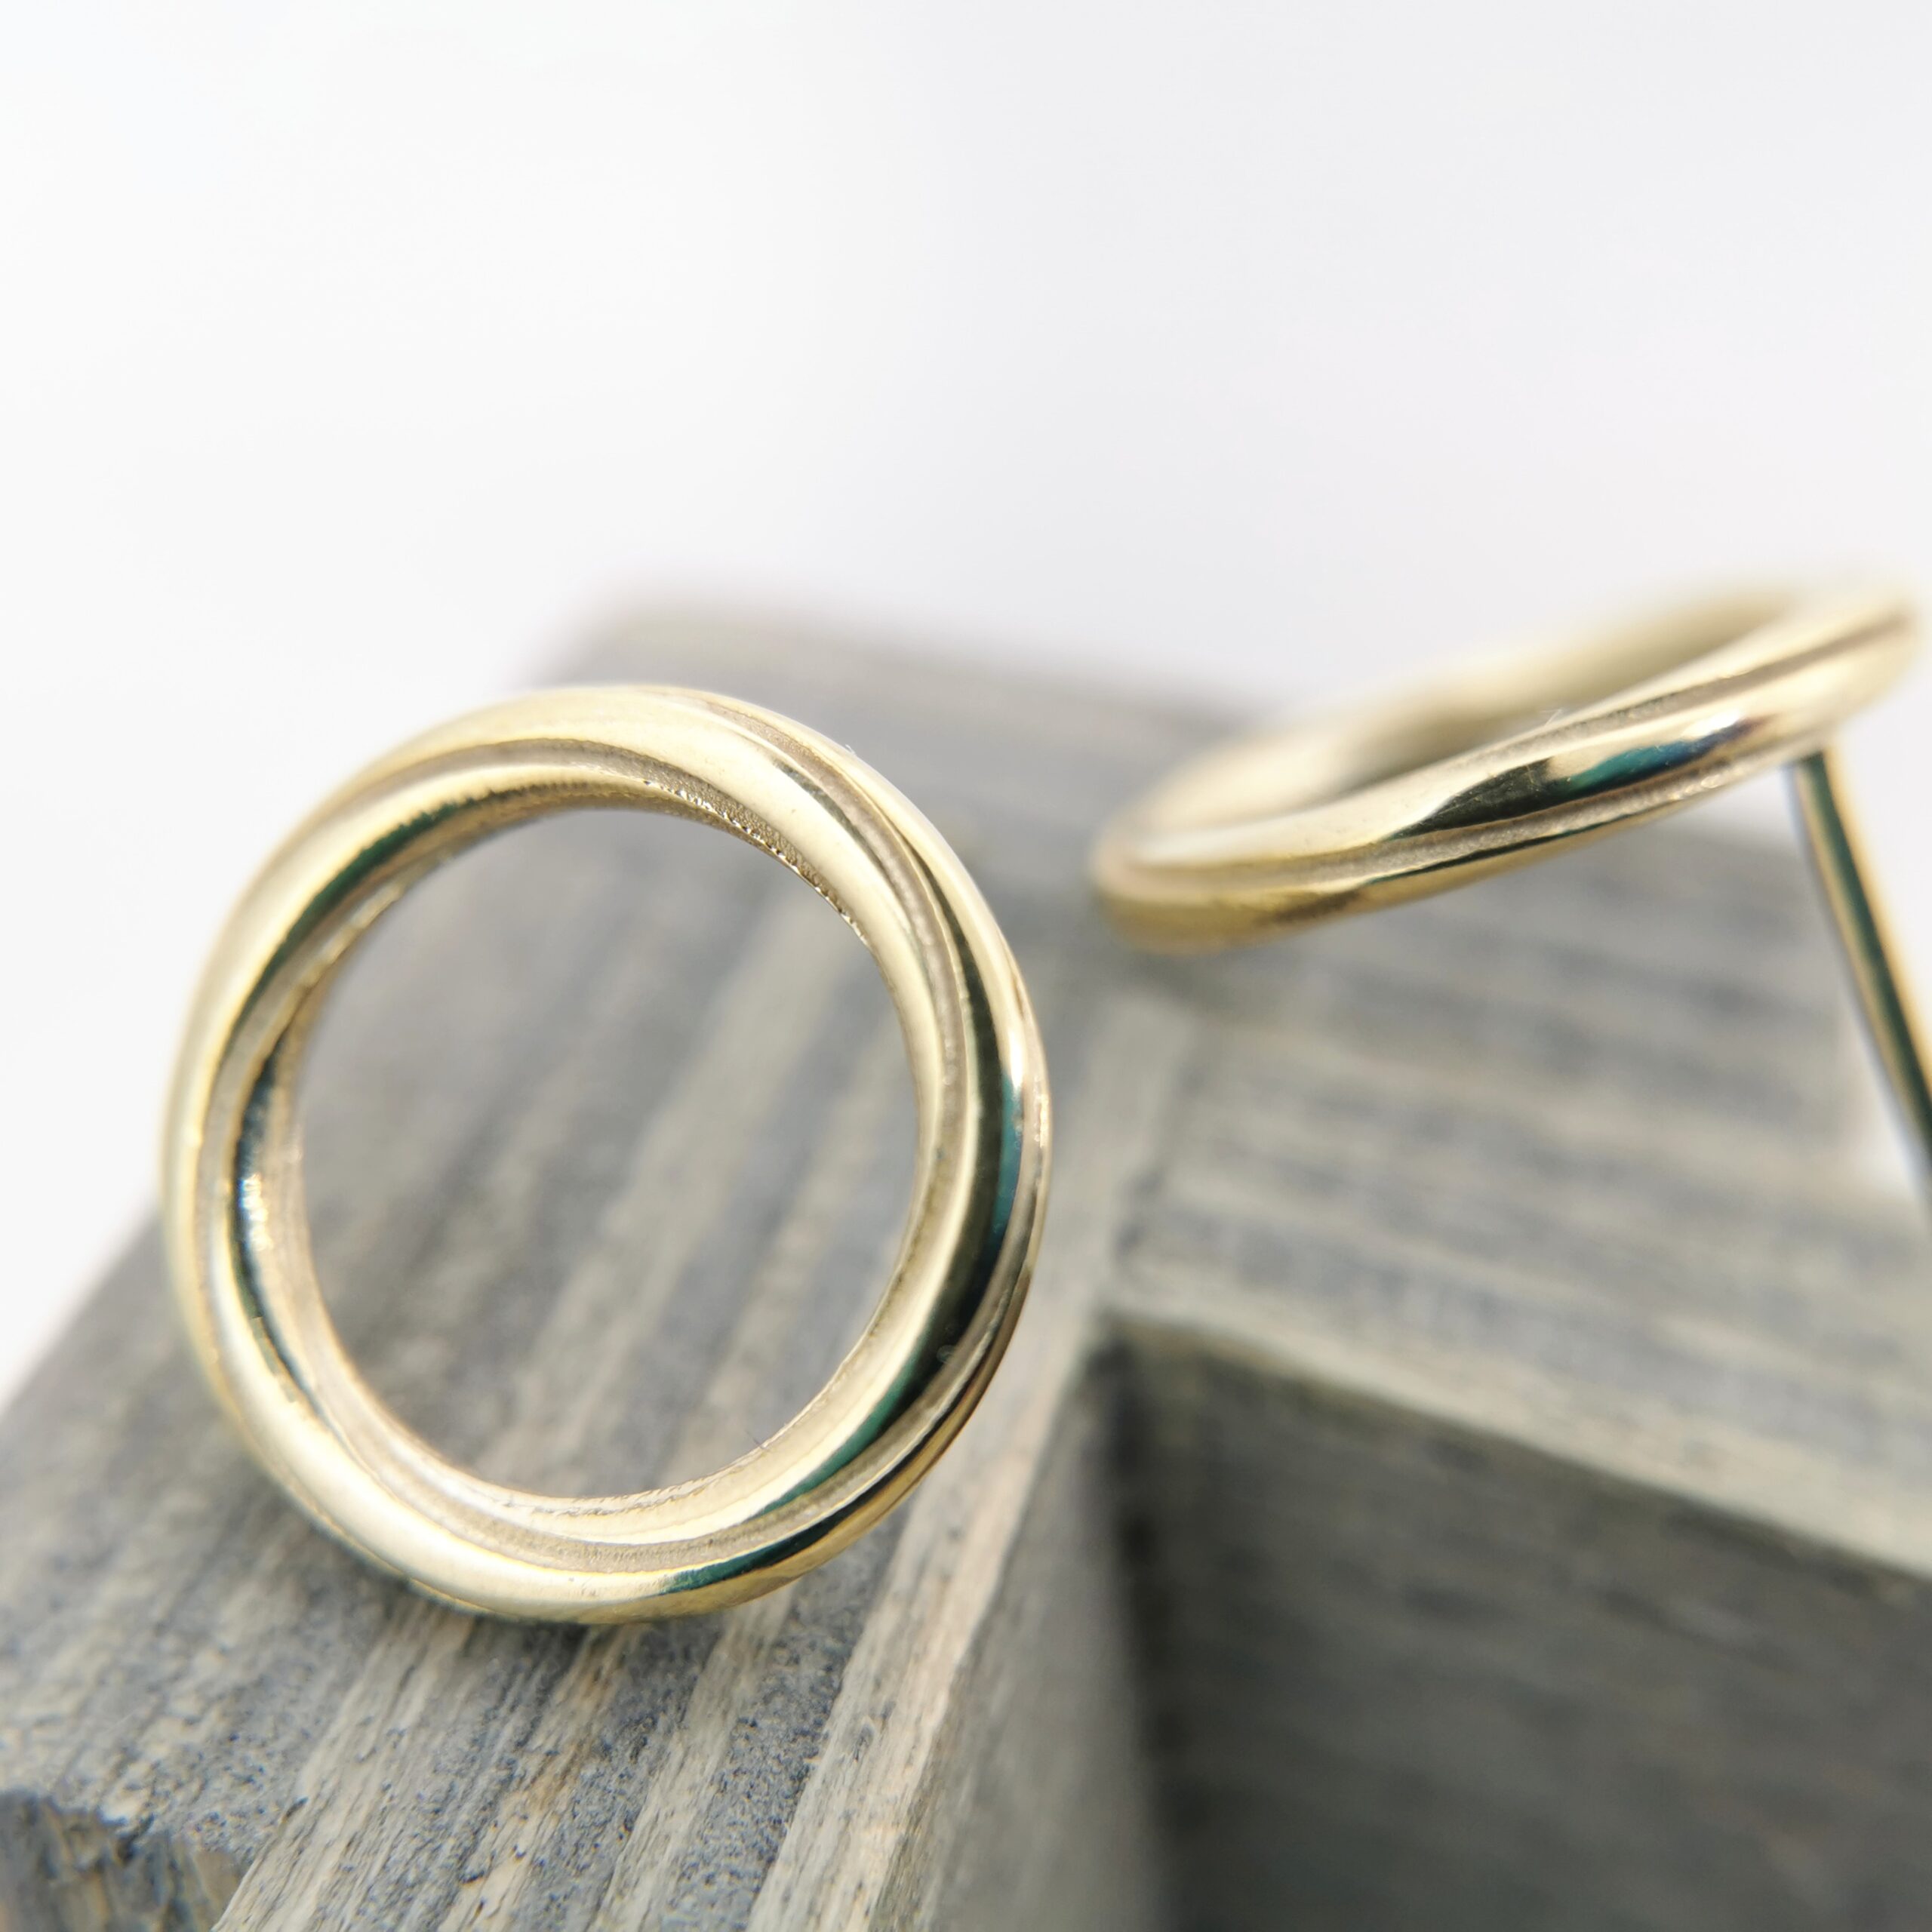 Silver gilt circle earrings handmade